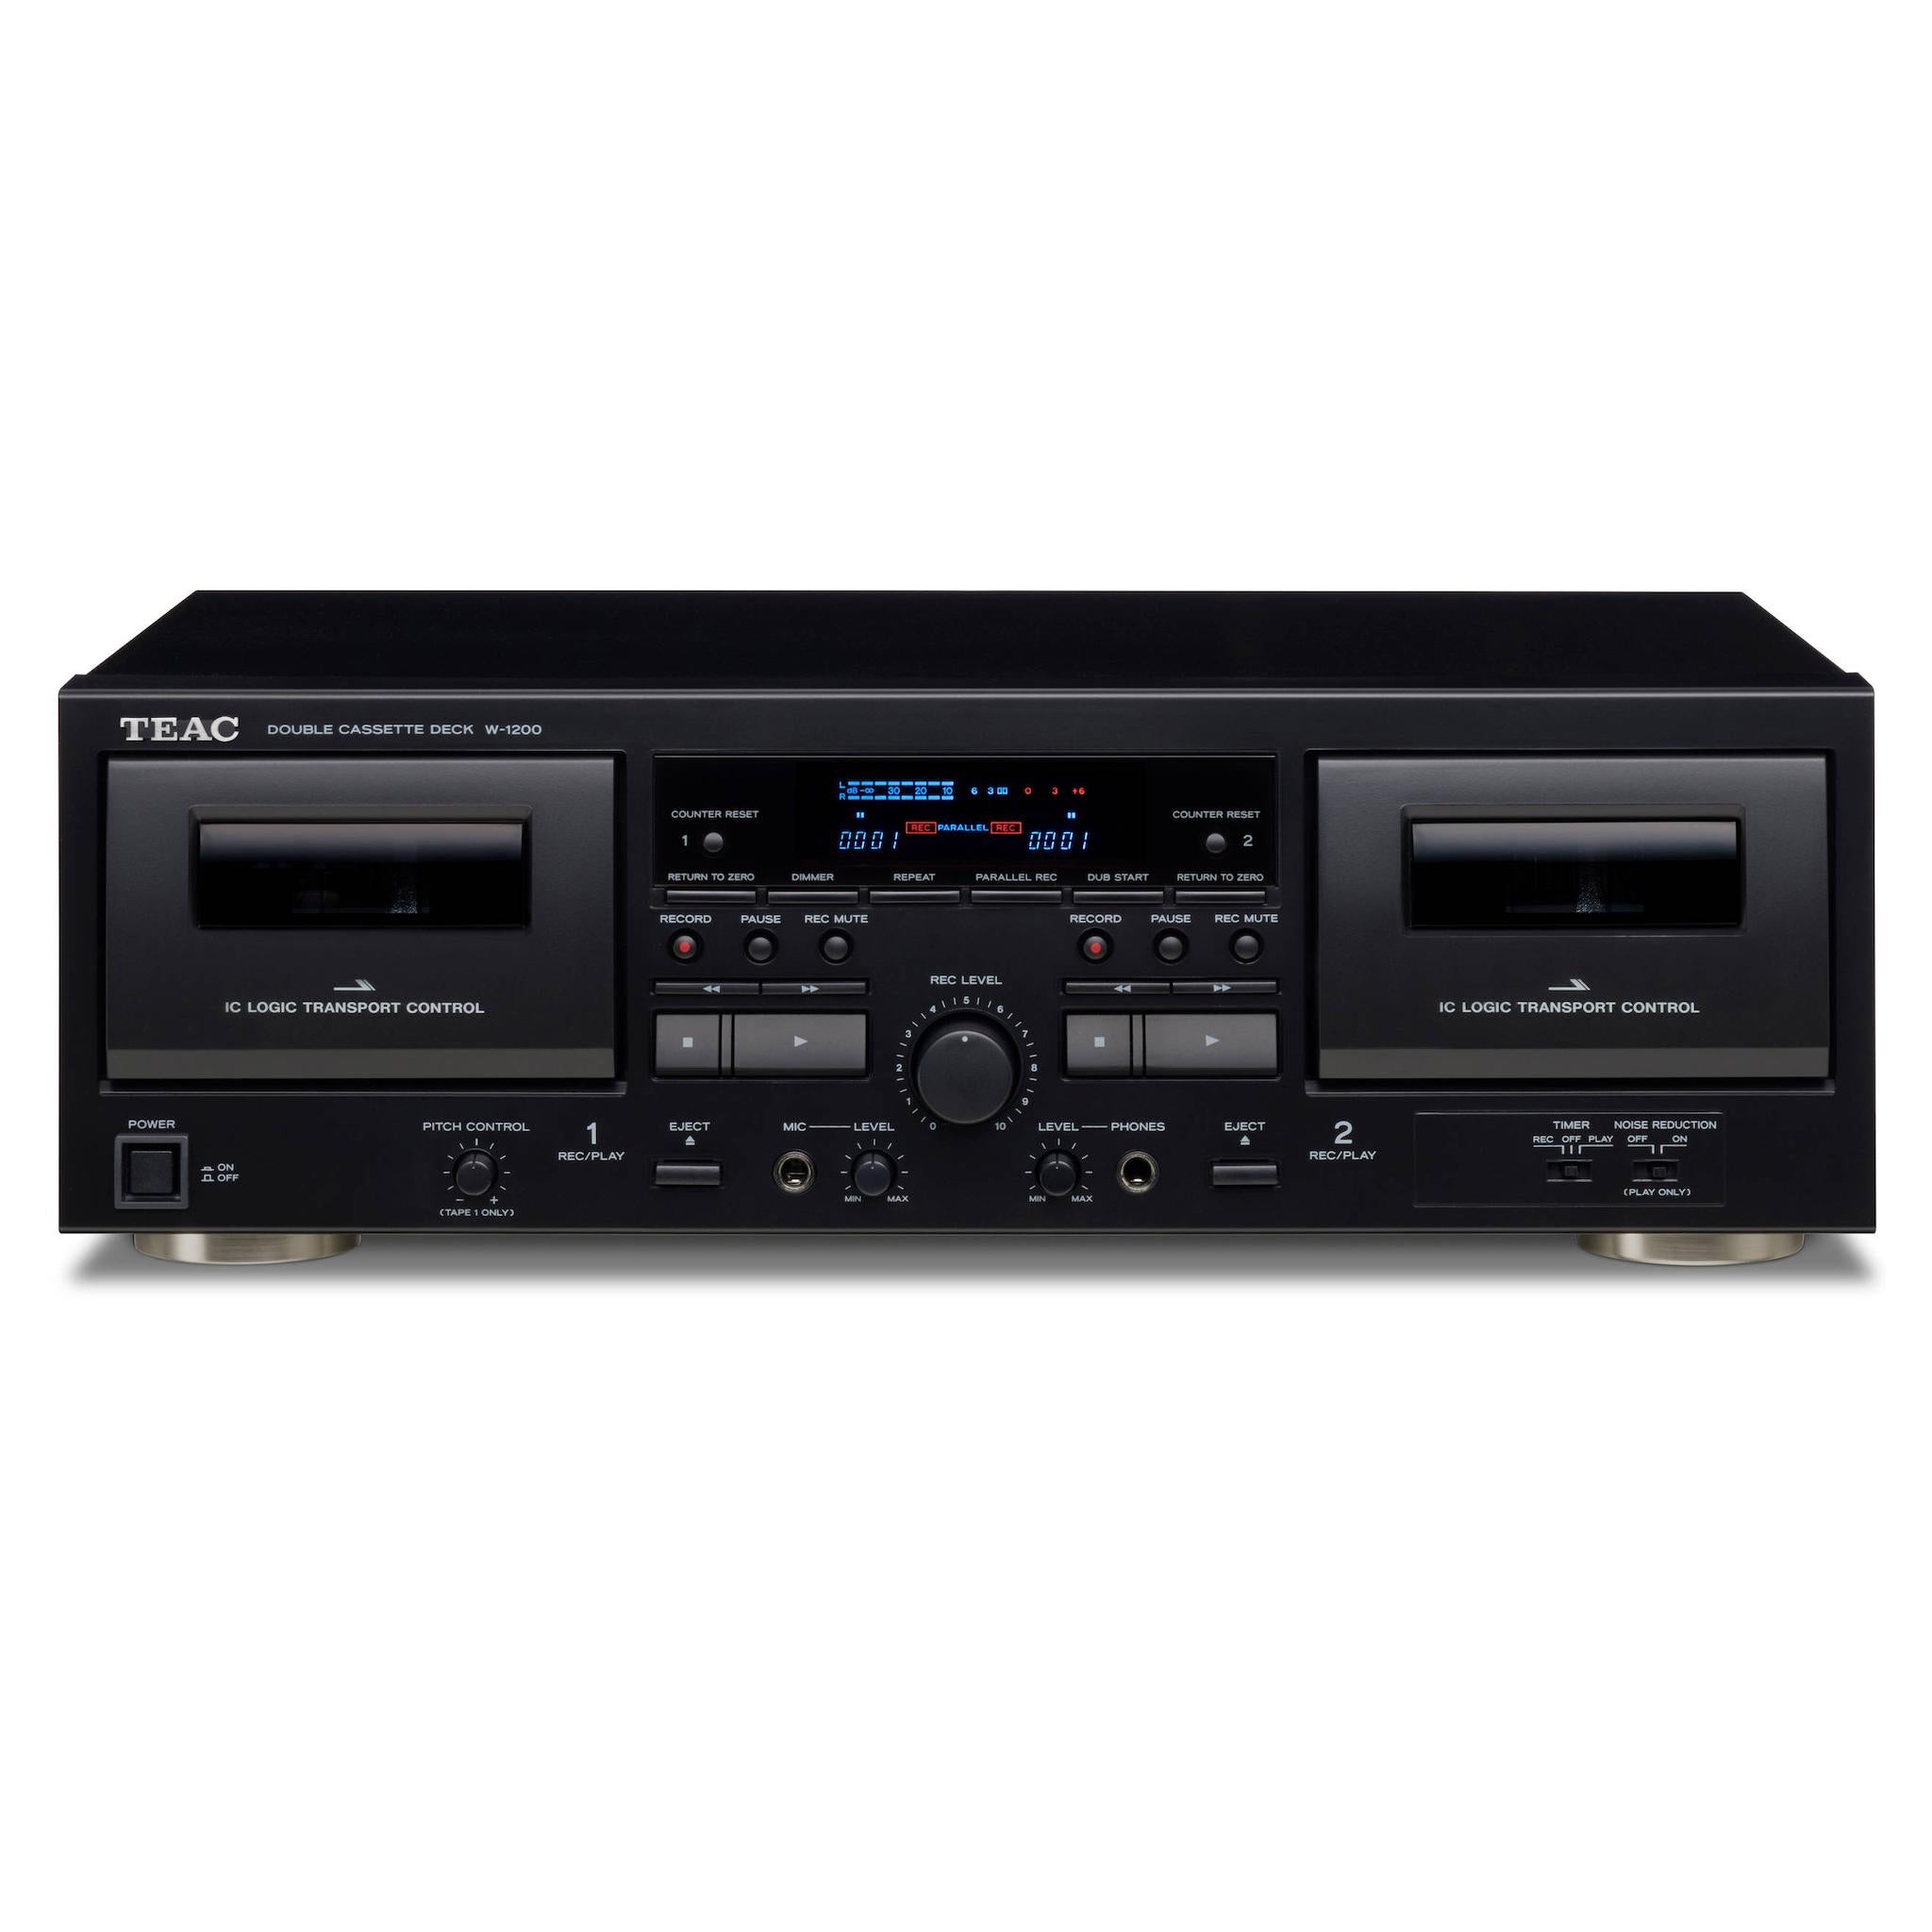 TEAC W-1200 - Double Cassette Deck - AVStore